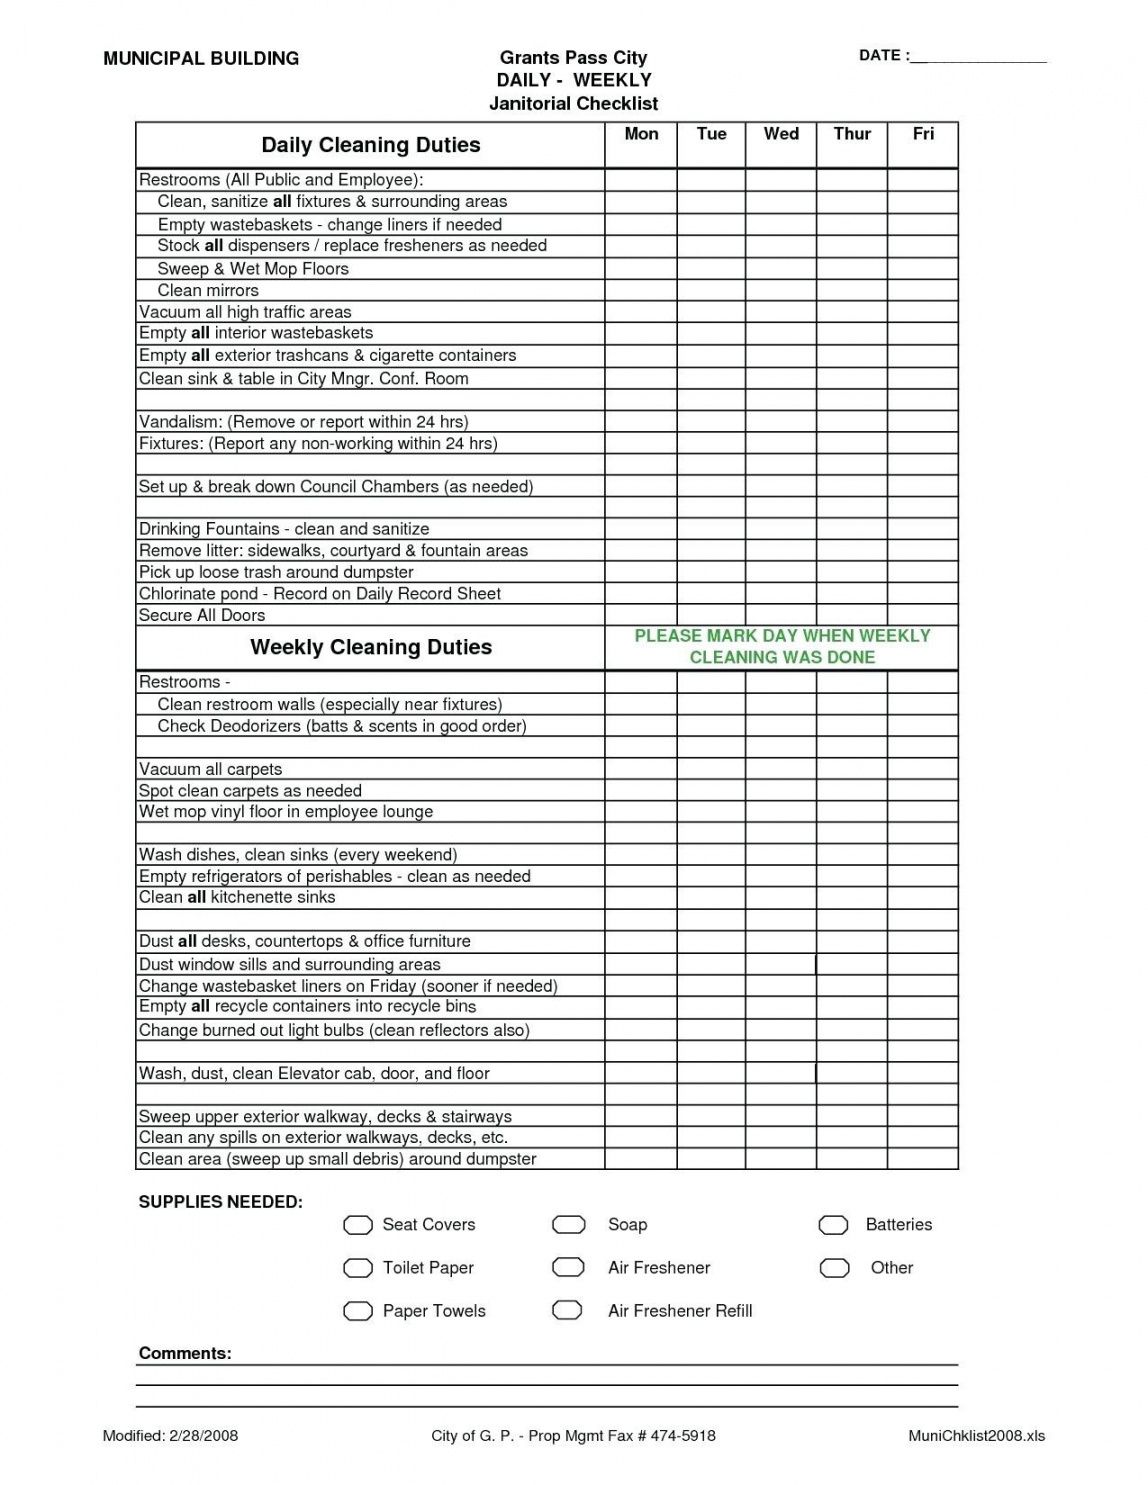 daycare-checklist-template